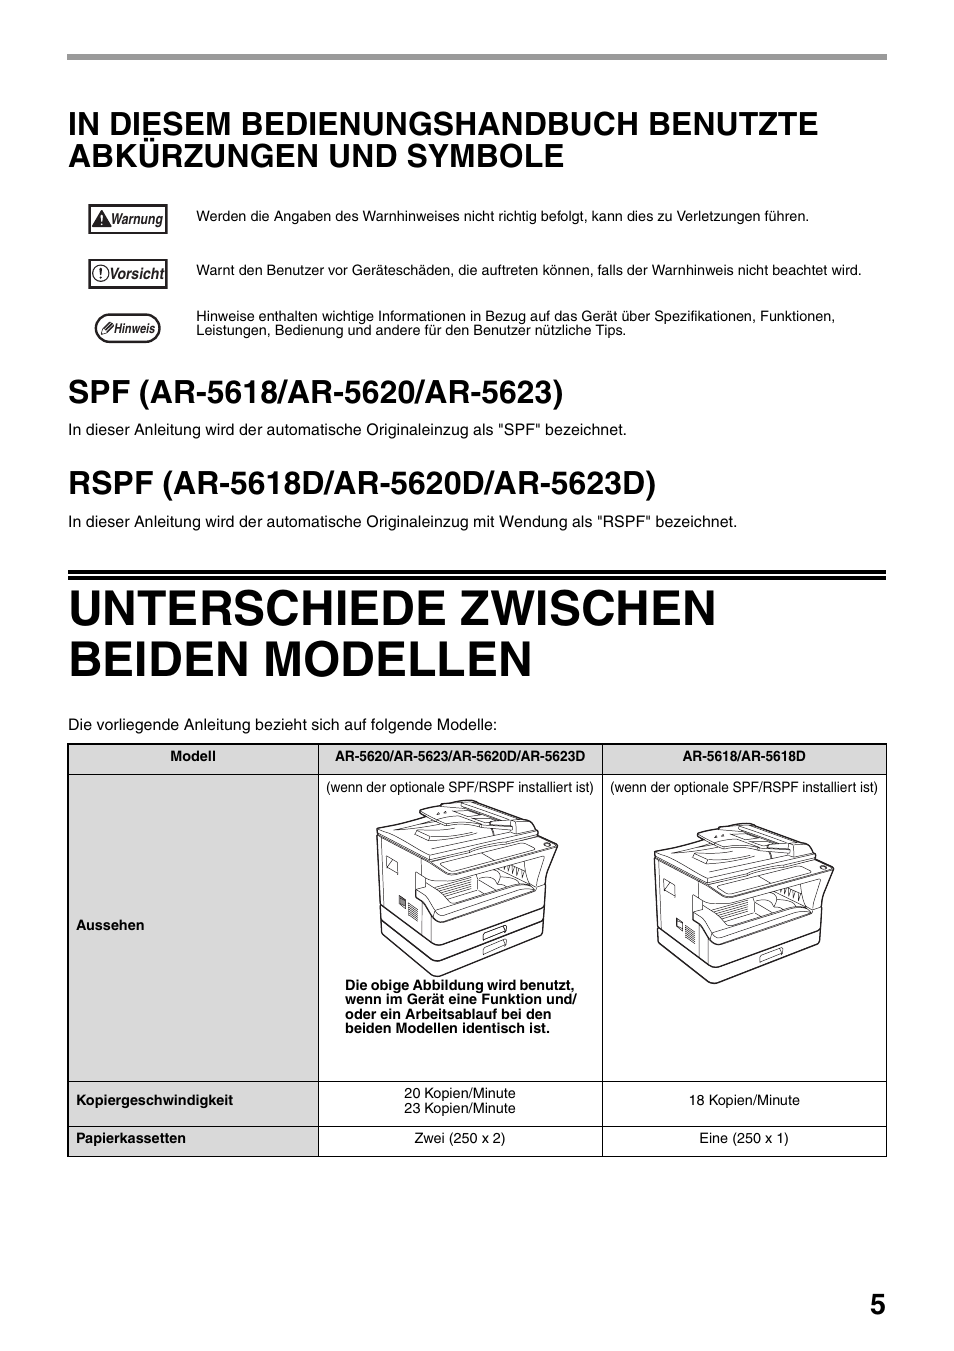 Spf (ar-5618/ar-5620/ar-5623), Rspf (ar-5618d/ar-5620d/ar-5623d), Unterschiede zwischen beiden modellen | Sharp AR-5618 Benutzerhandbuch | Seite 7 / 108